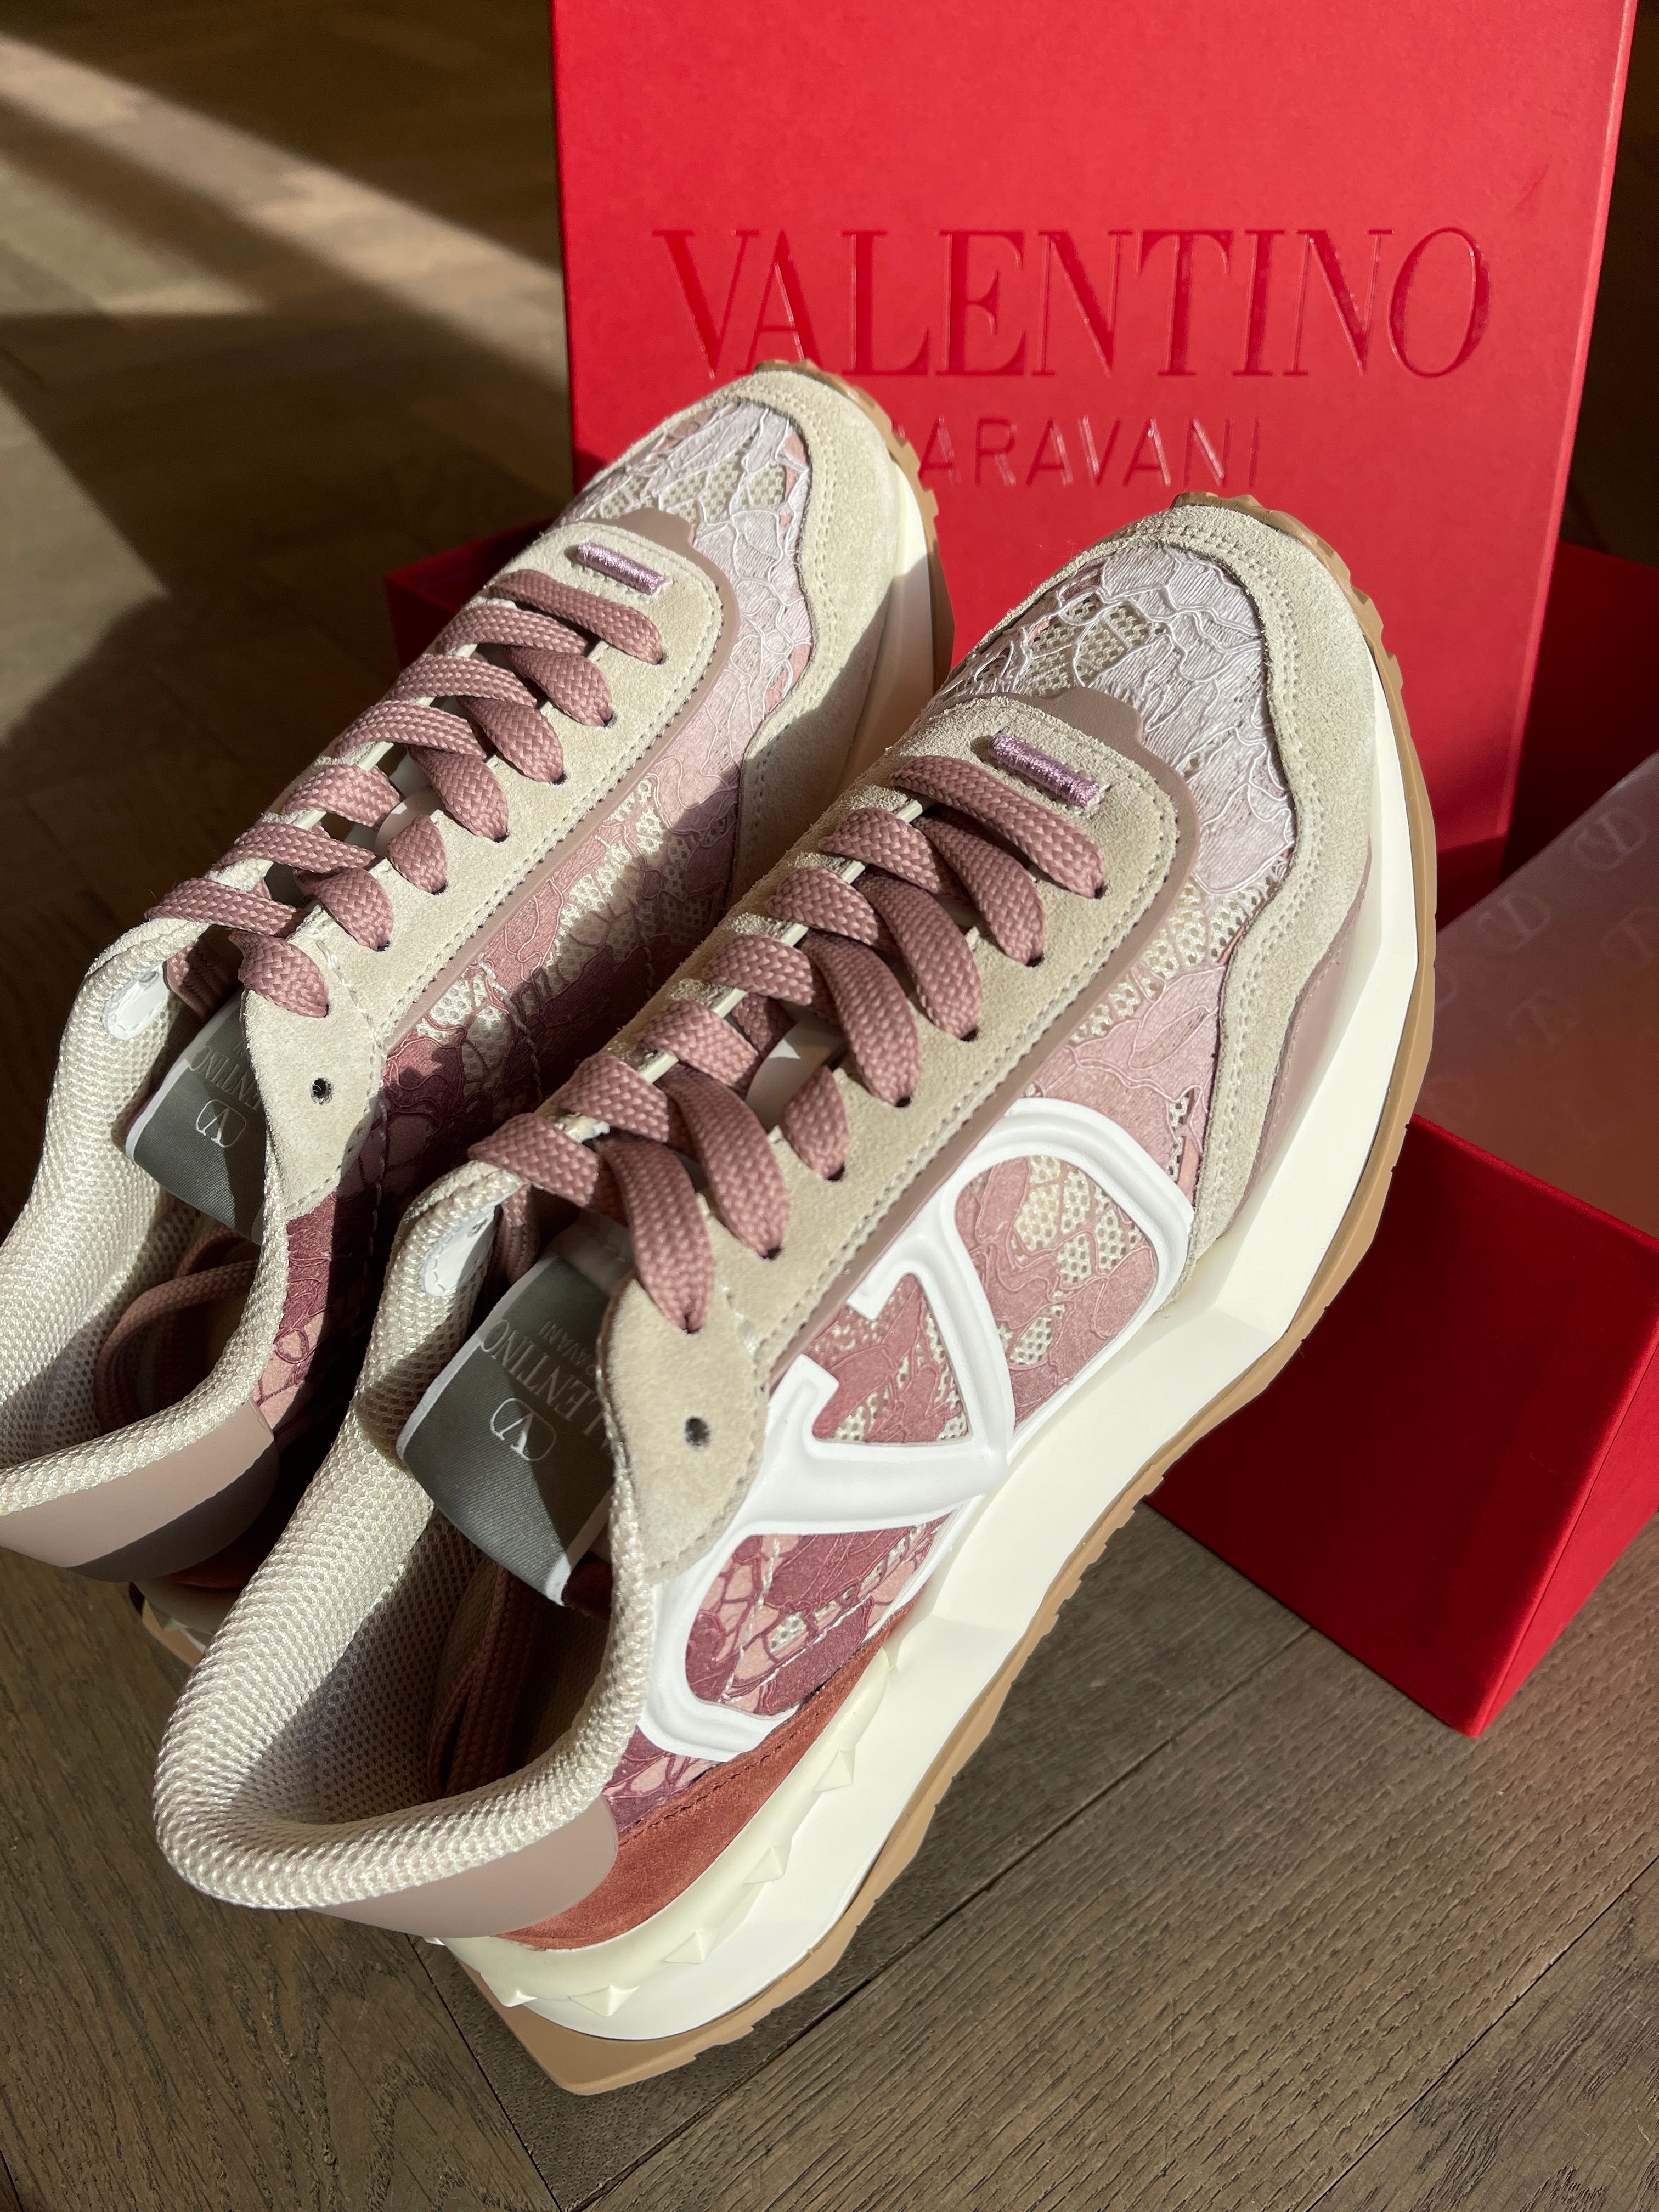 Valentino Garavani Lace and Mesh Lacerunner Sneaker - Pink - 39.5